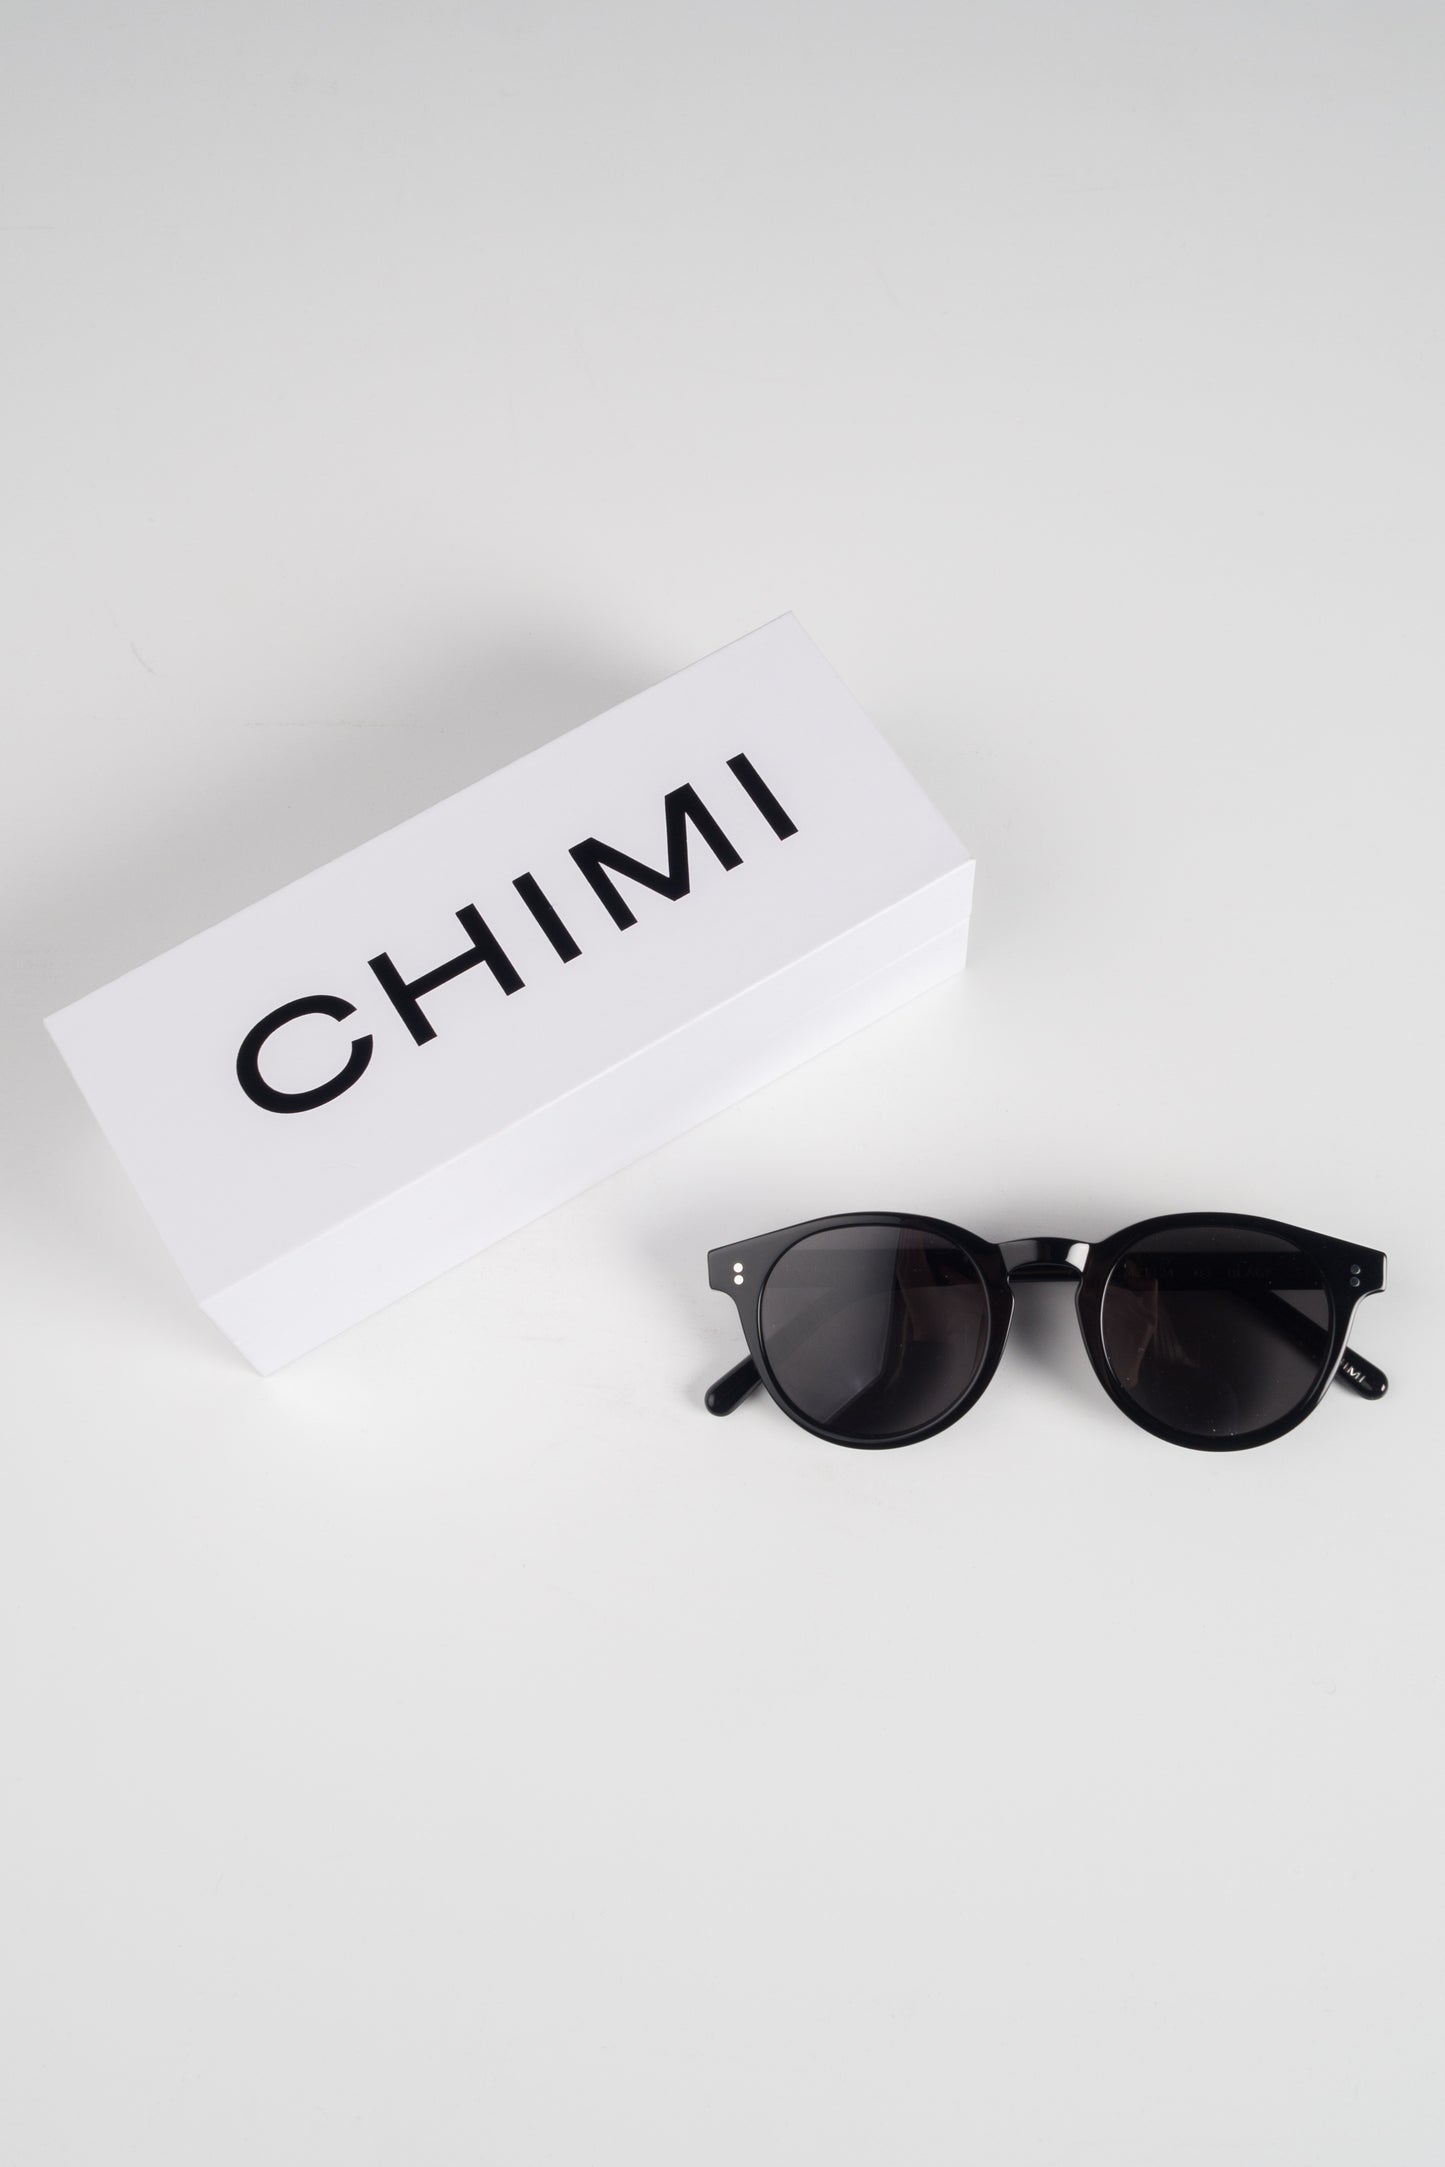 CHIMI 03 aurinkolasit